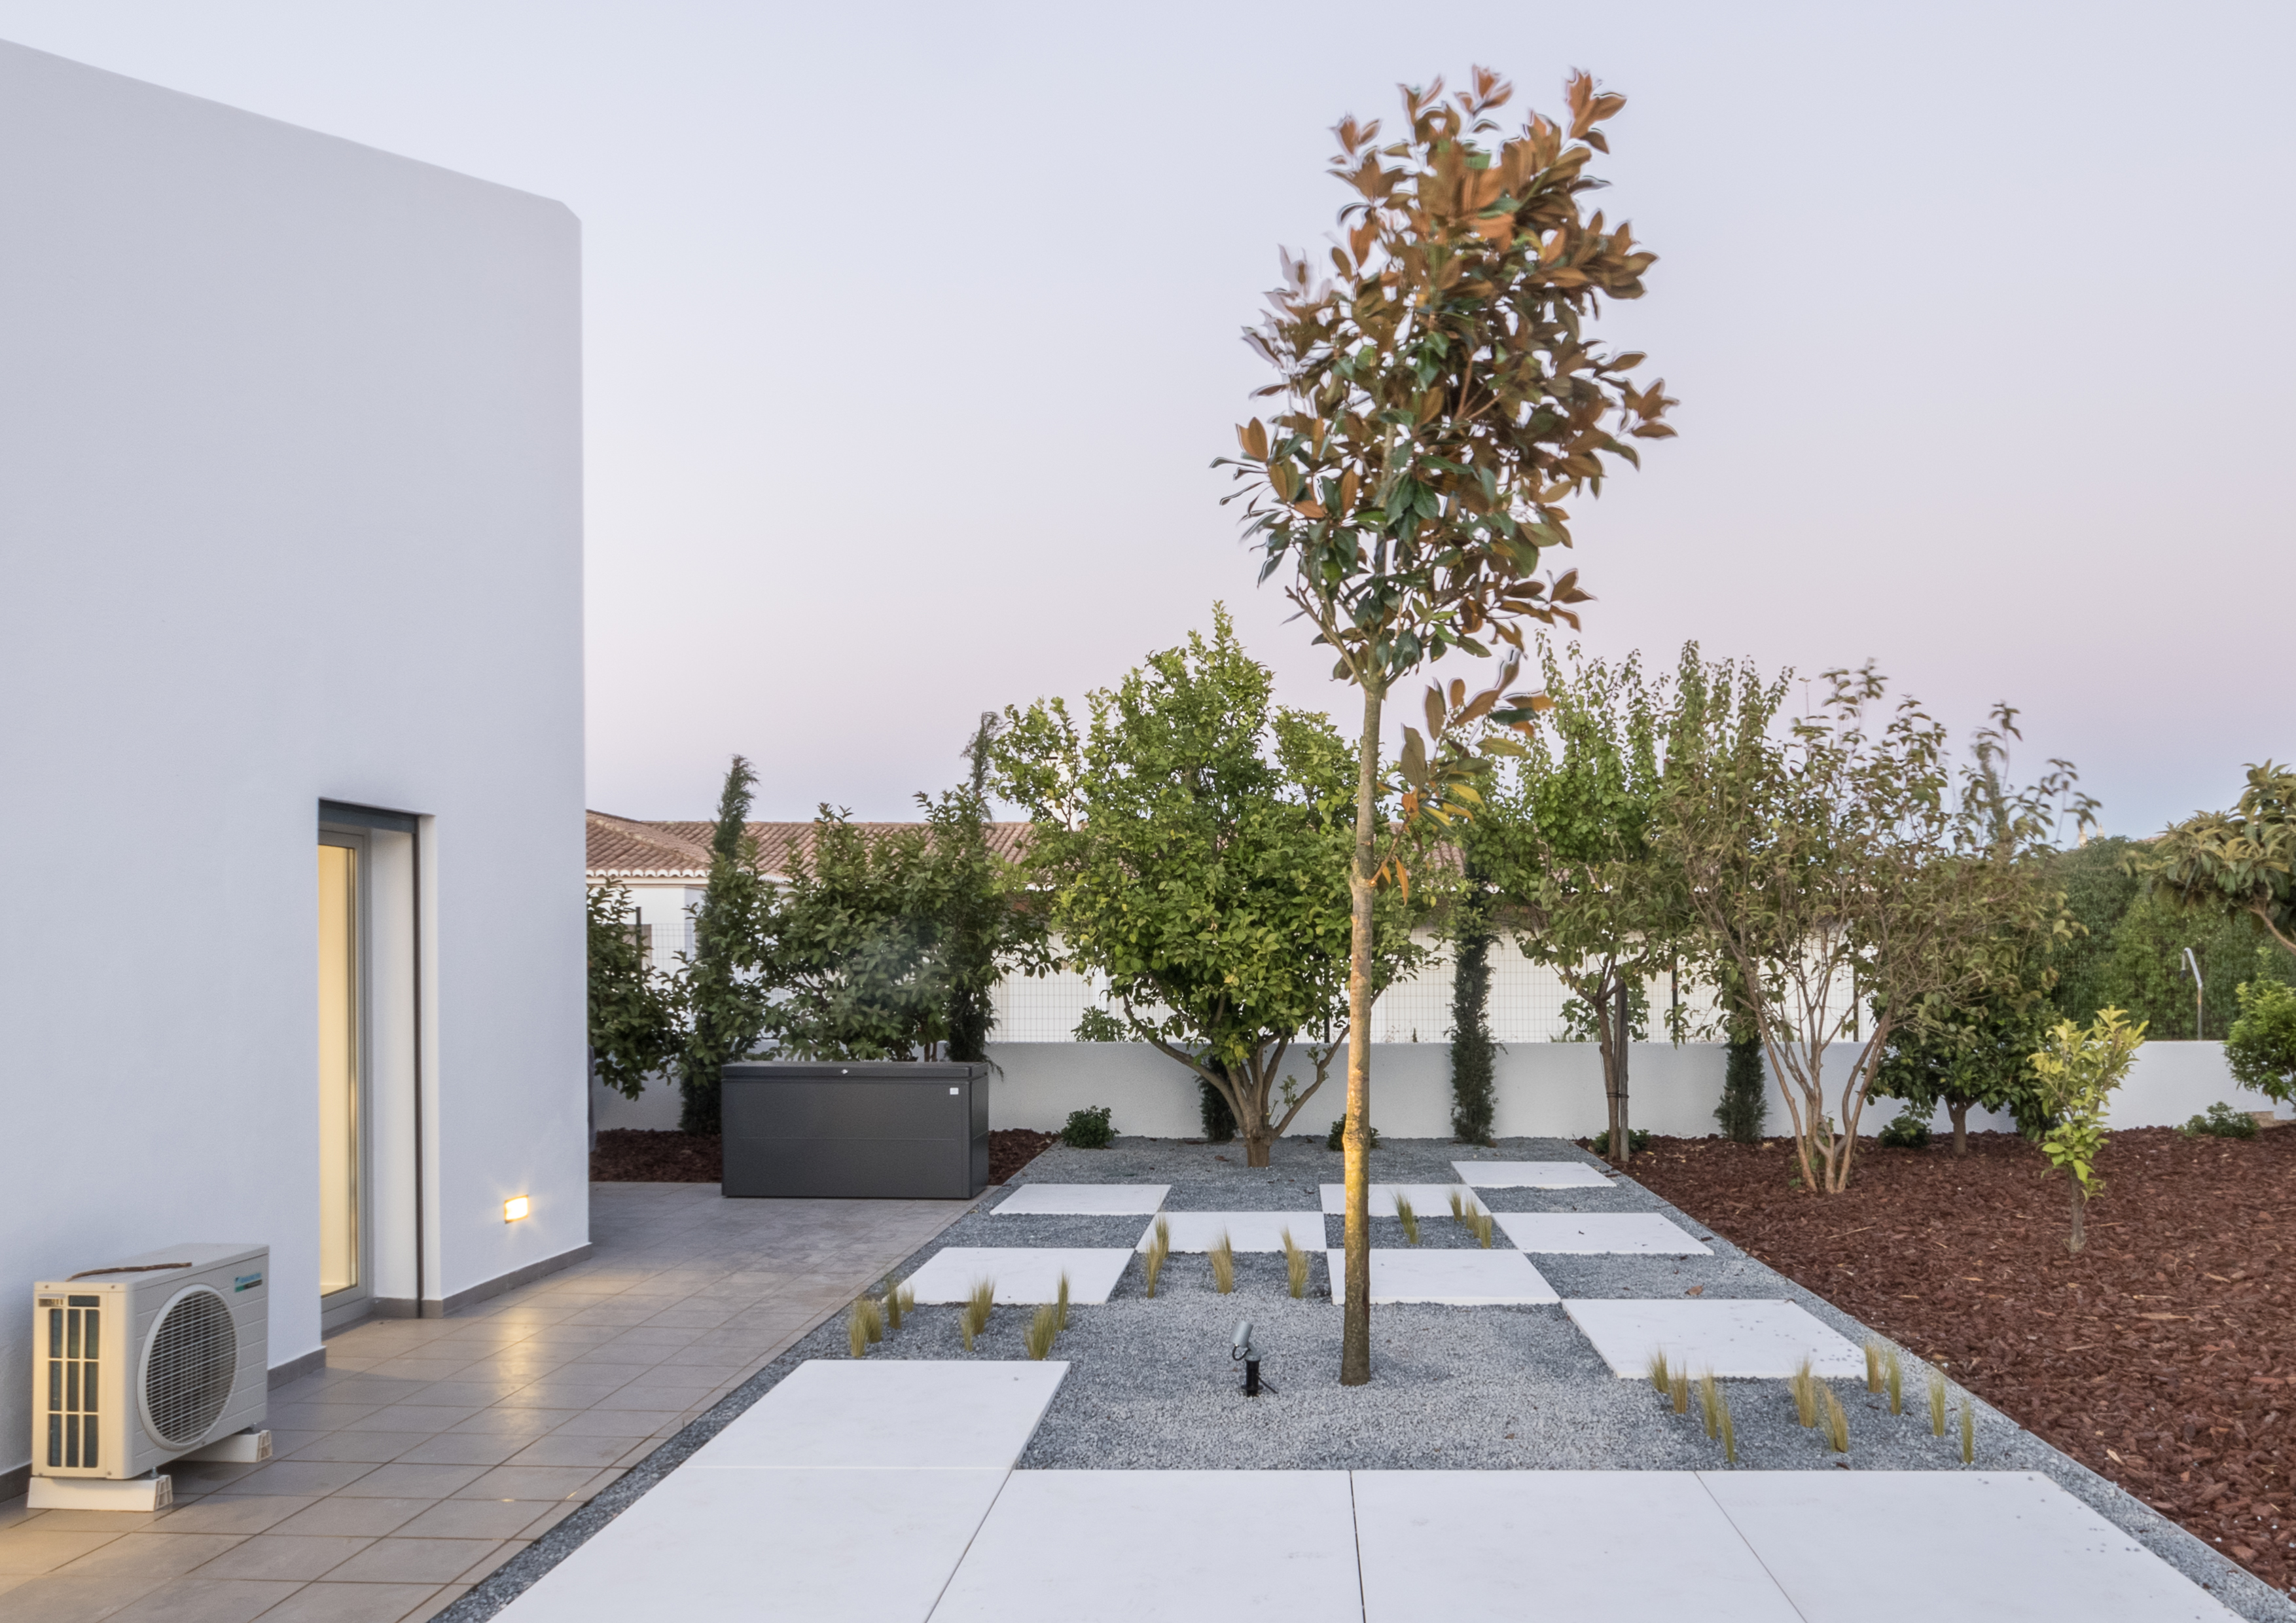 32 Sample Diseao de jardines exteriores para espacios pequeaos with Photos Design